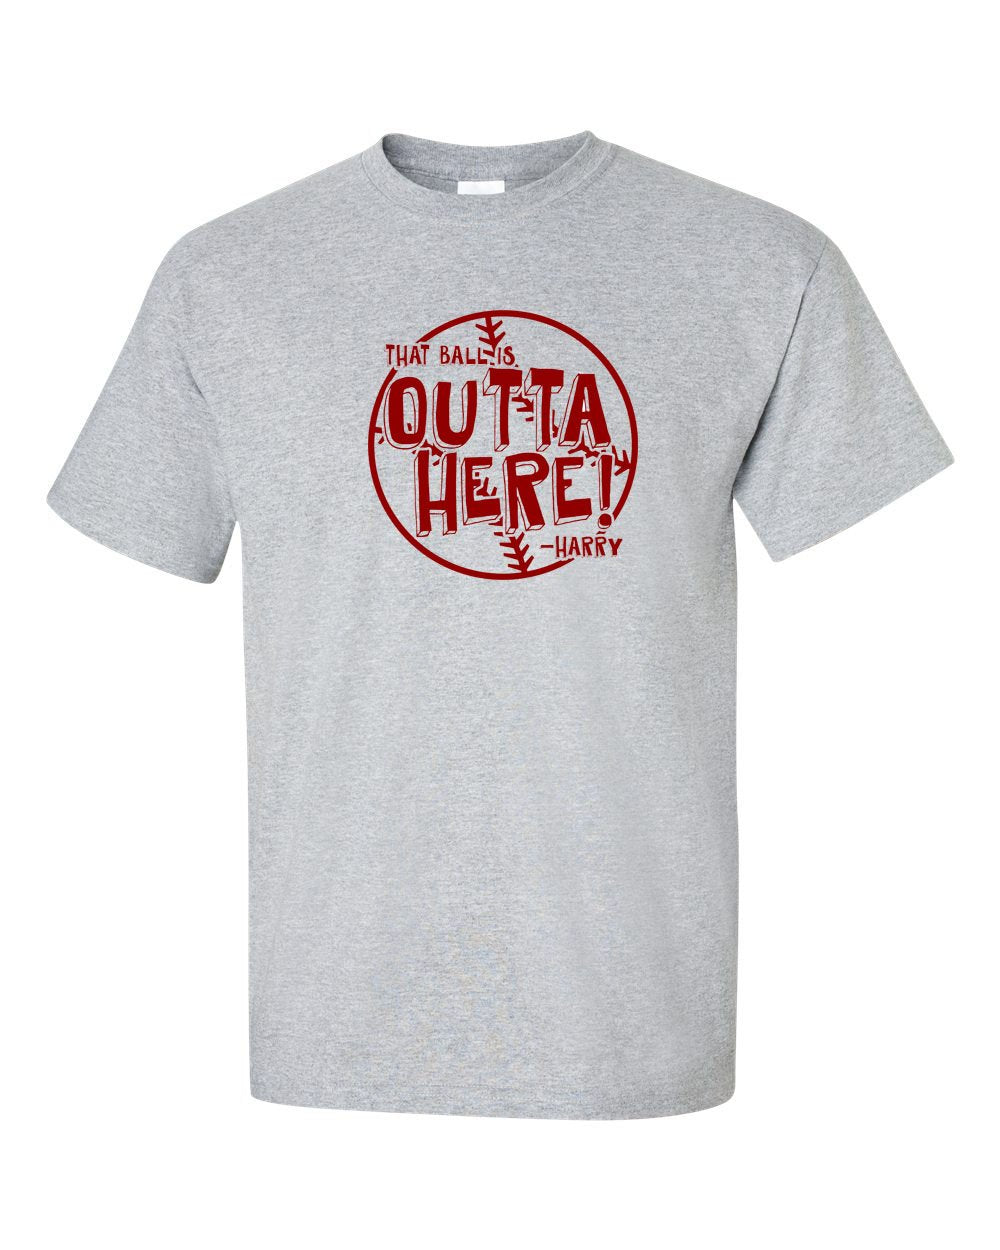 It's Outta Here V2 Mens/Unisex T-Shirt